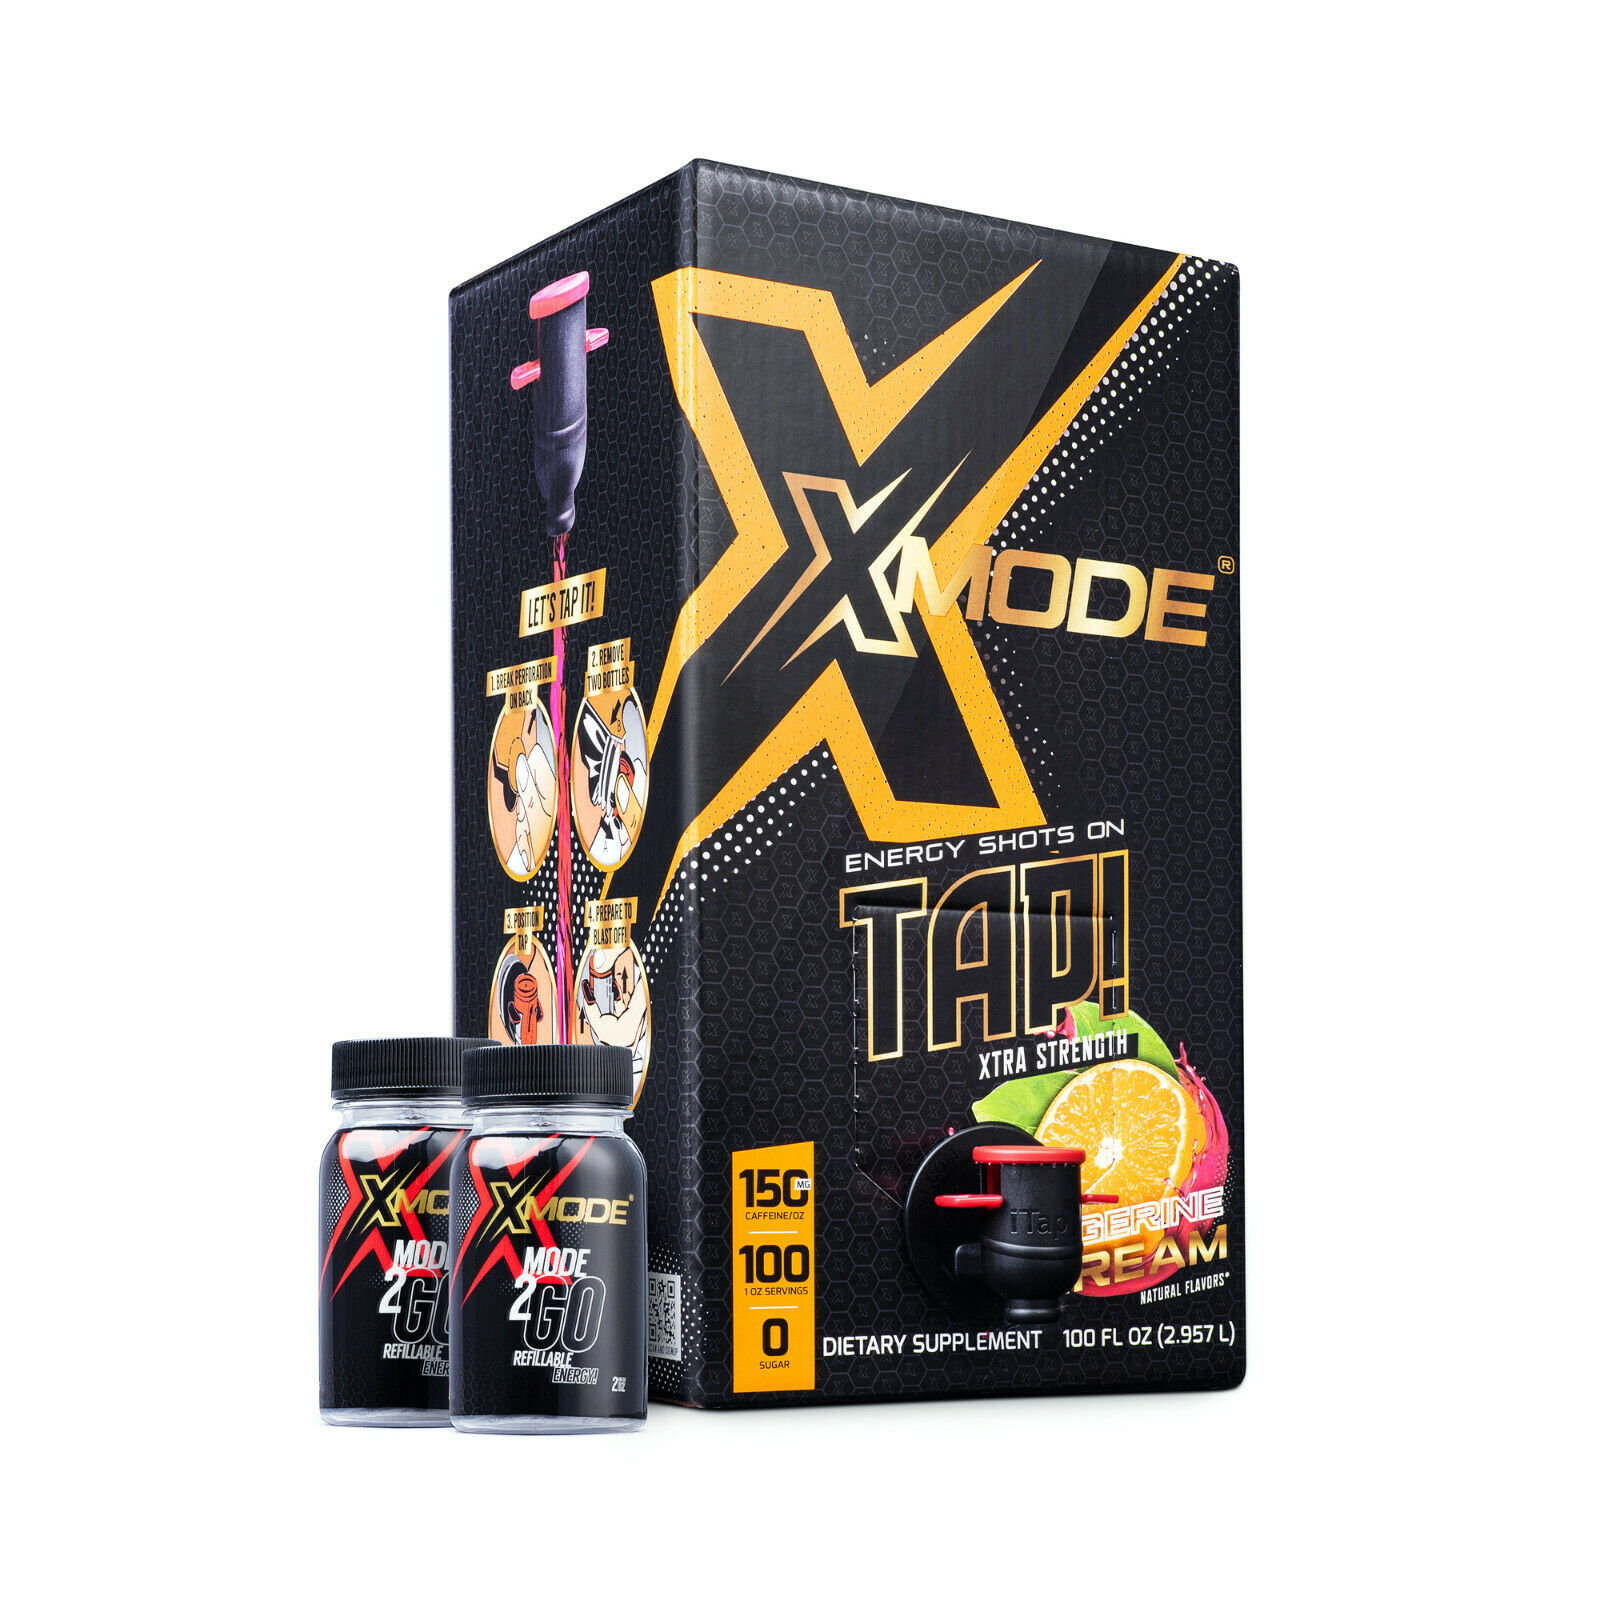 X-mode Energy Shot - 100 Serving Box Only $29.99 - Tangerine Flavor